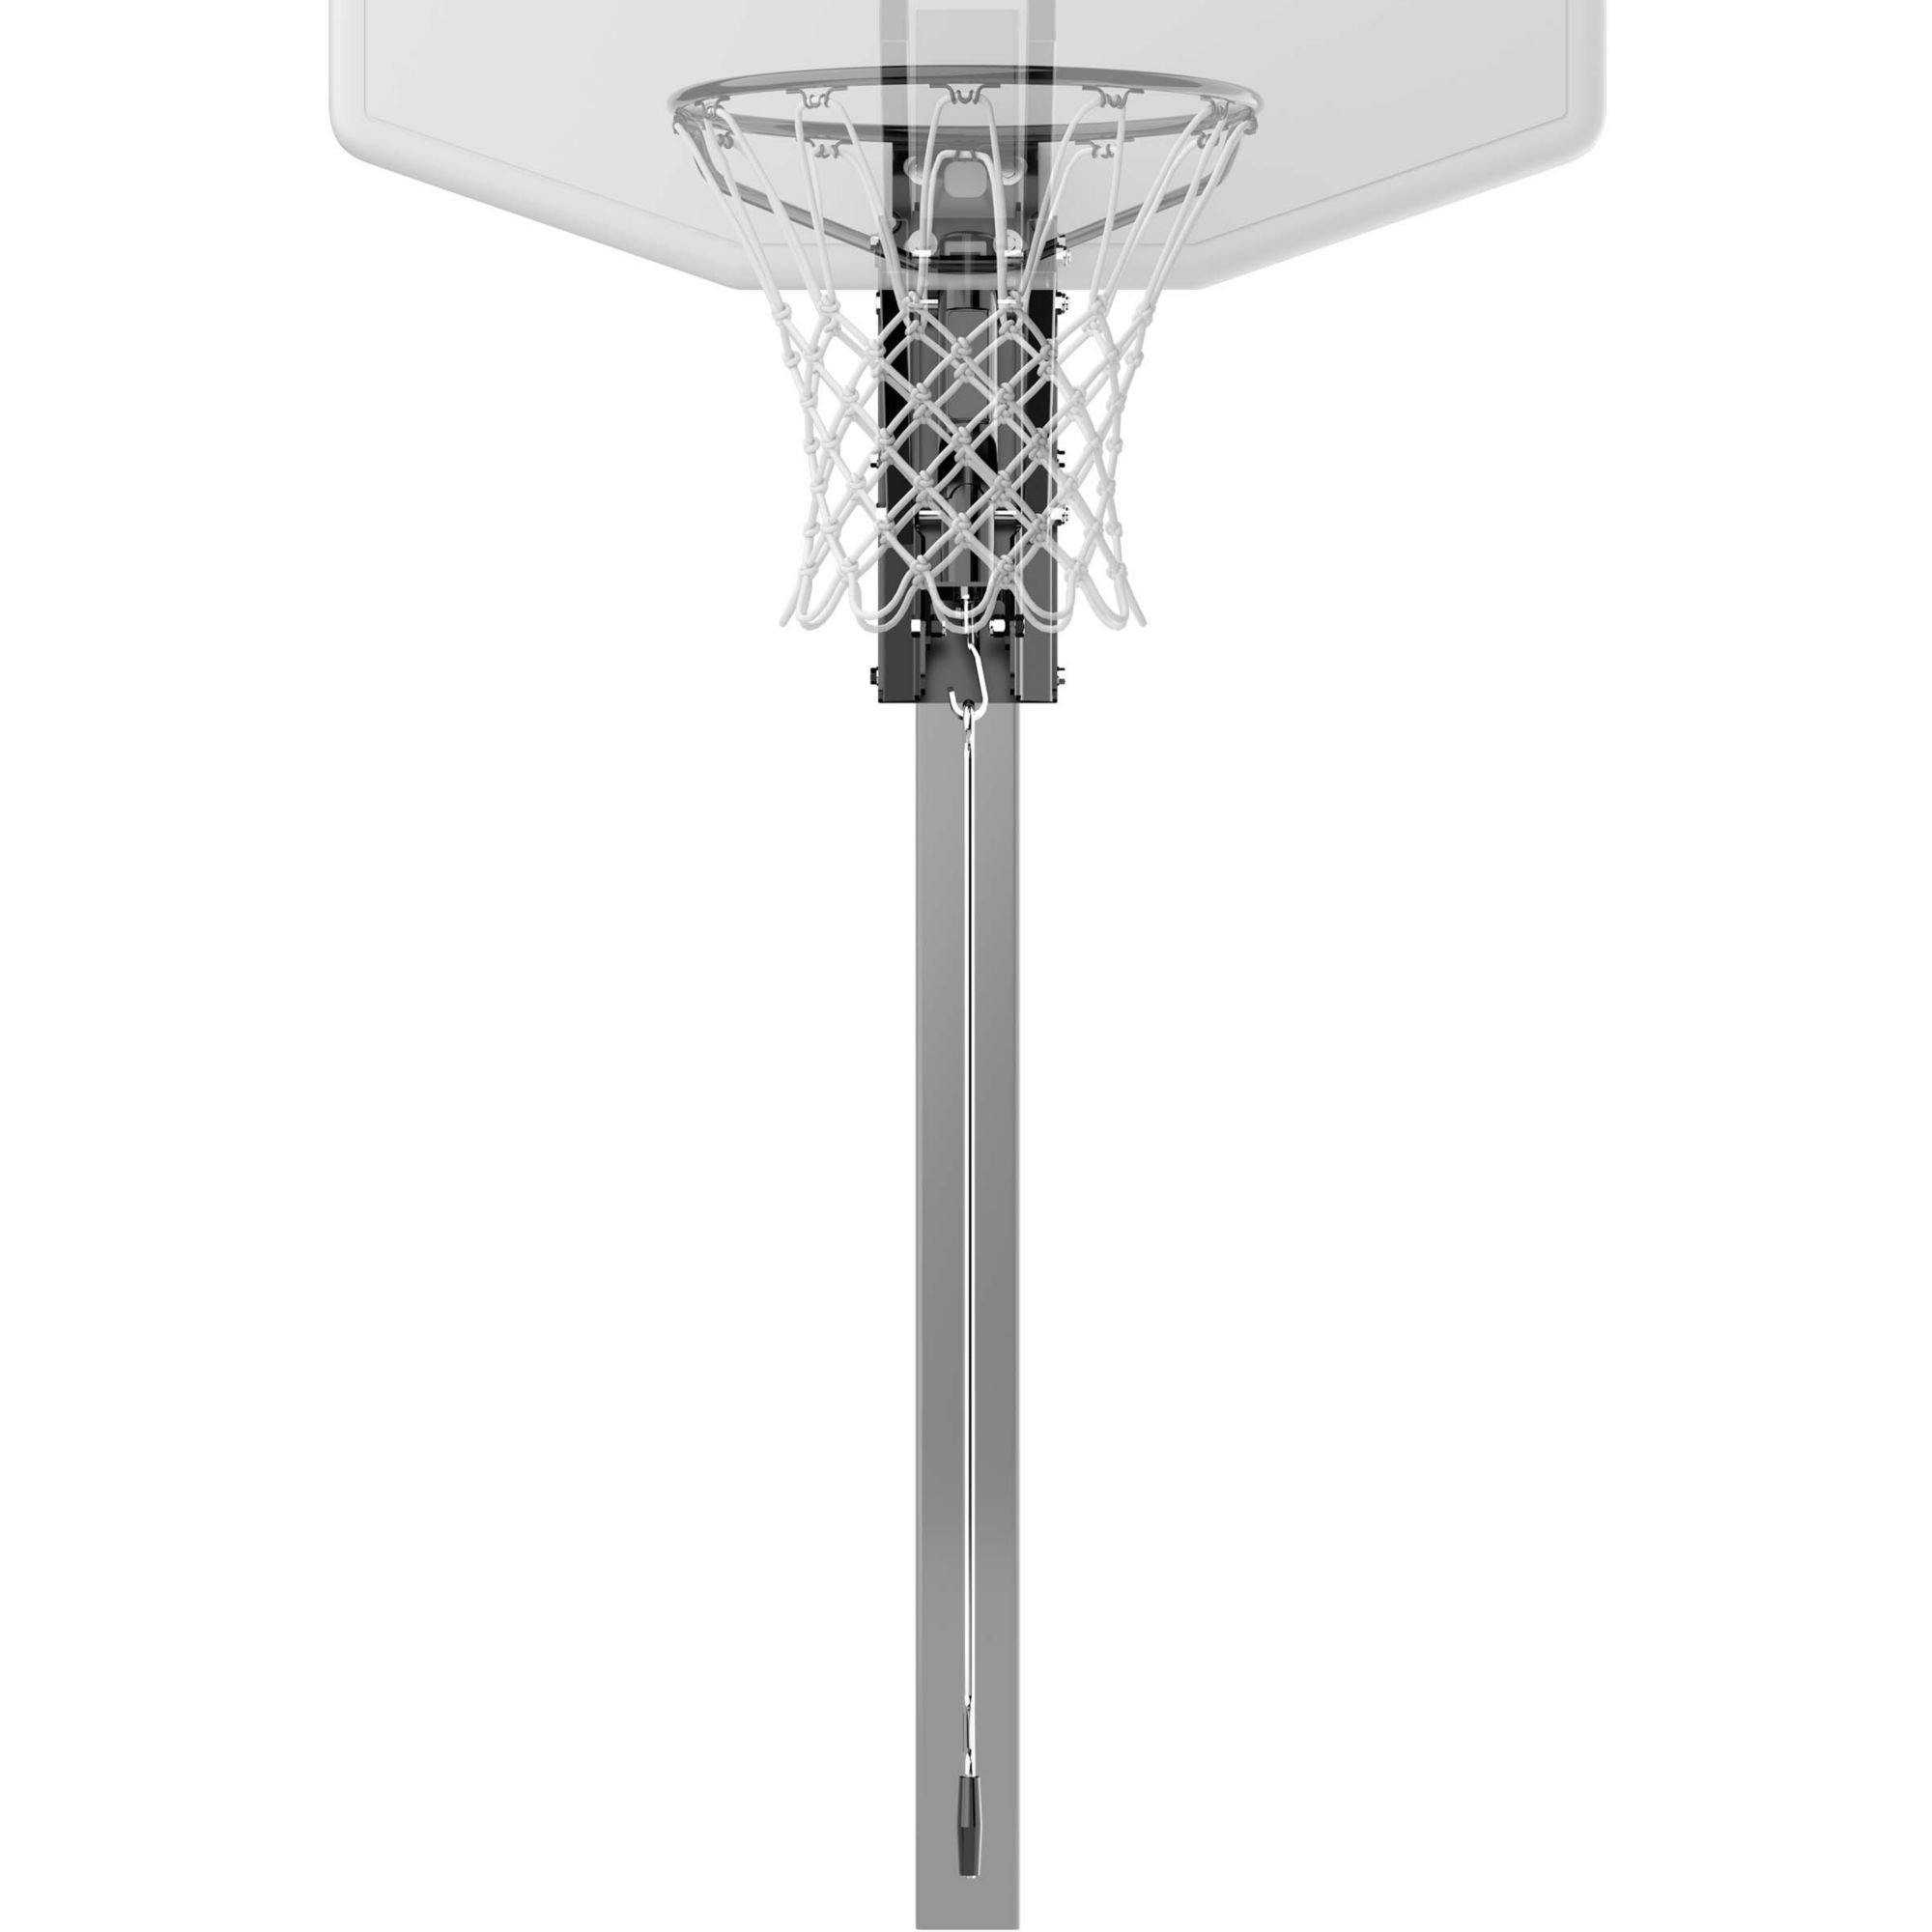 Spalding Lift System U-Turn For Basketball Hoops